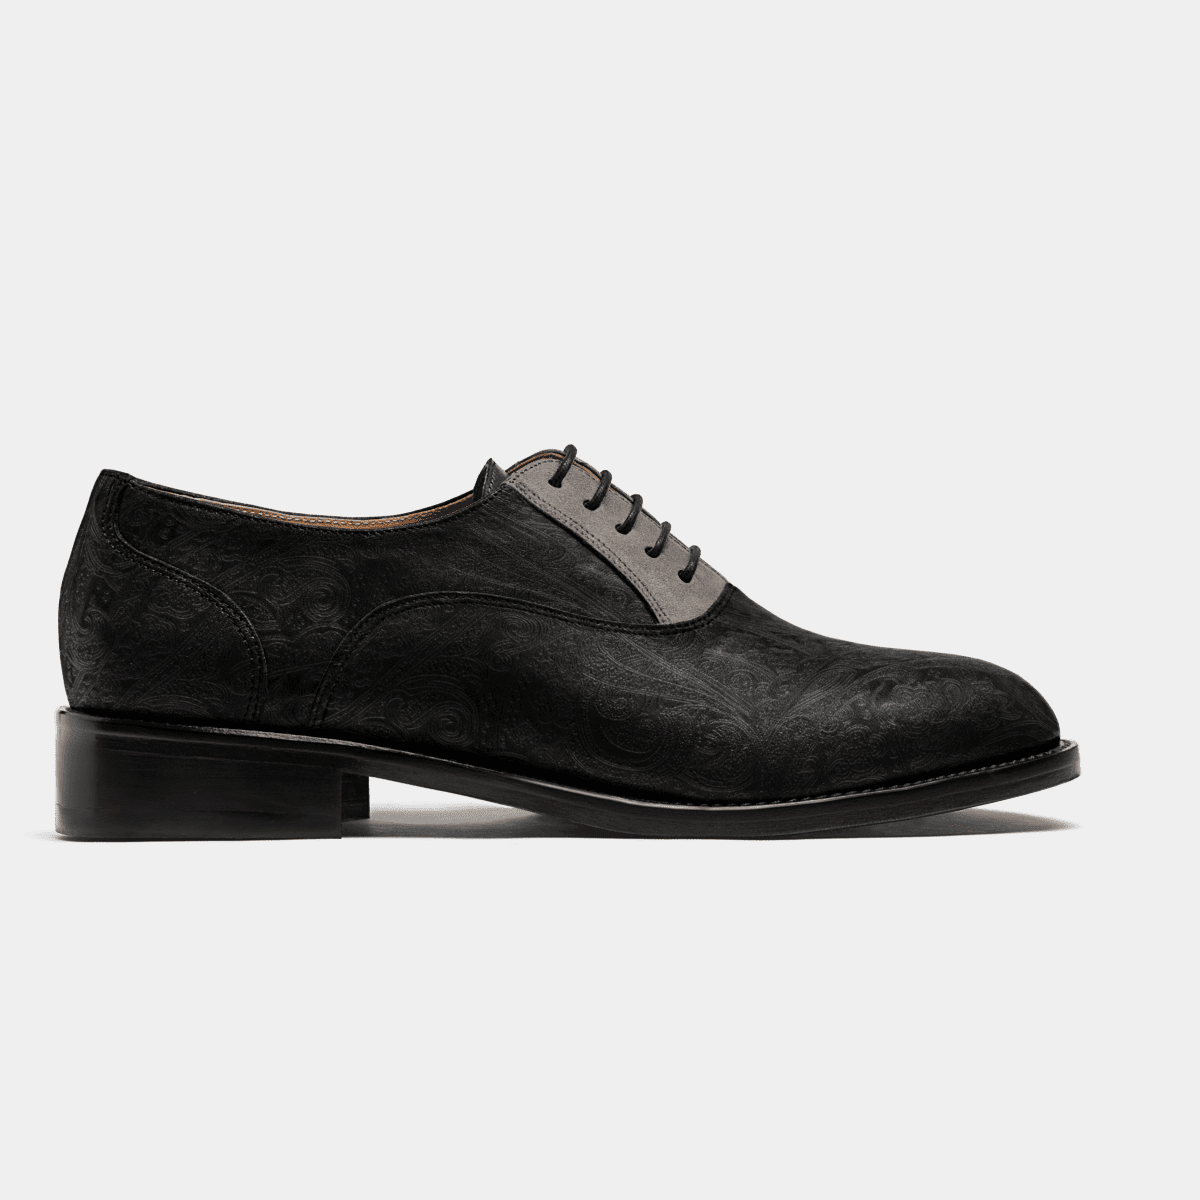 Oxford shoes - black & grey velvet & suede | Sumissura